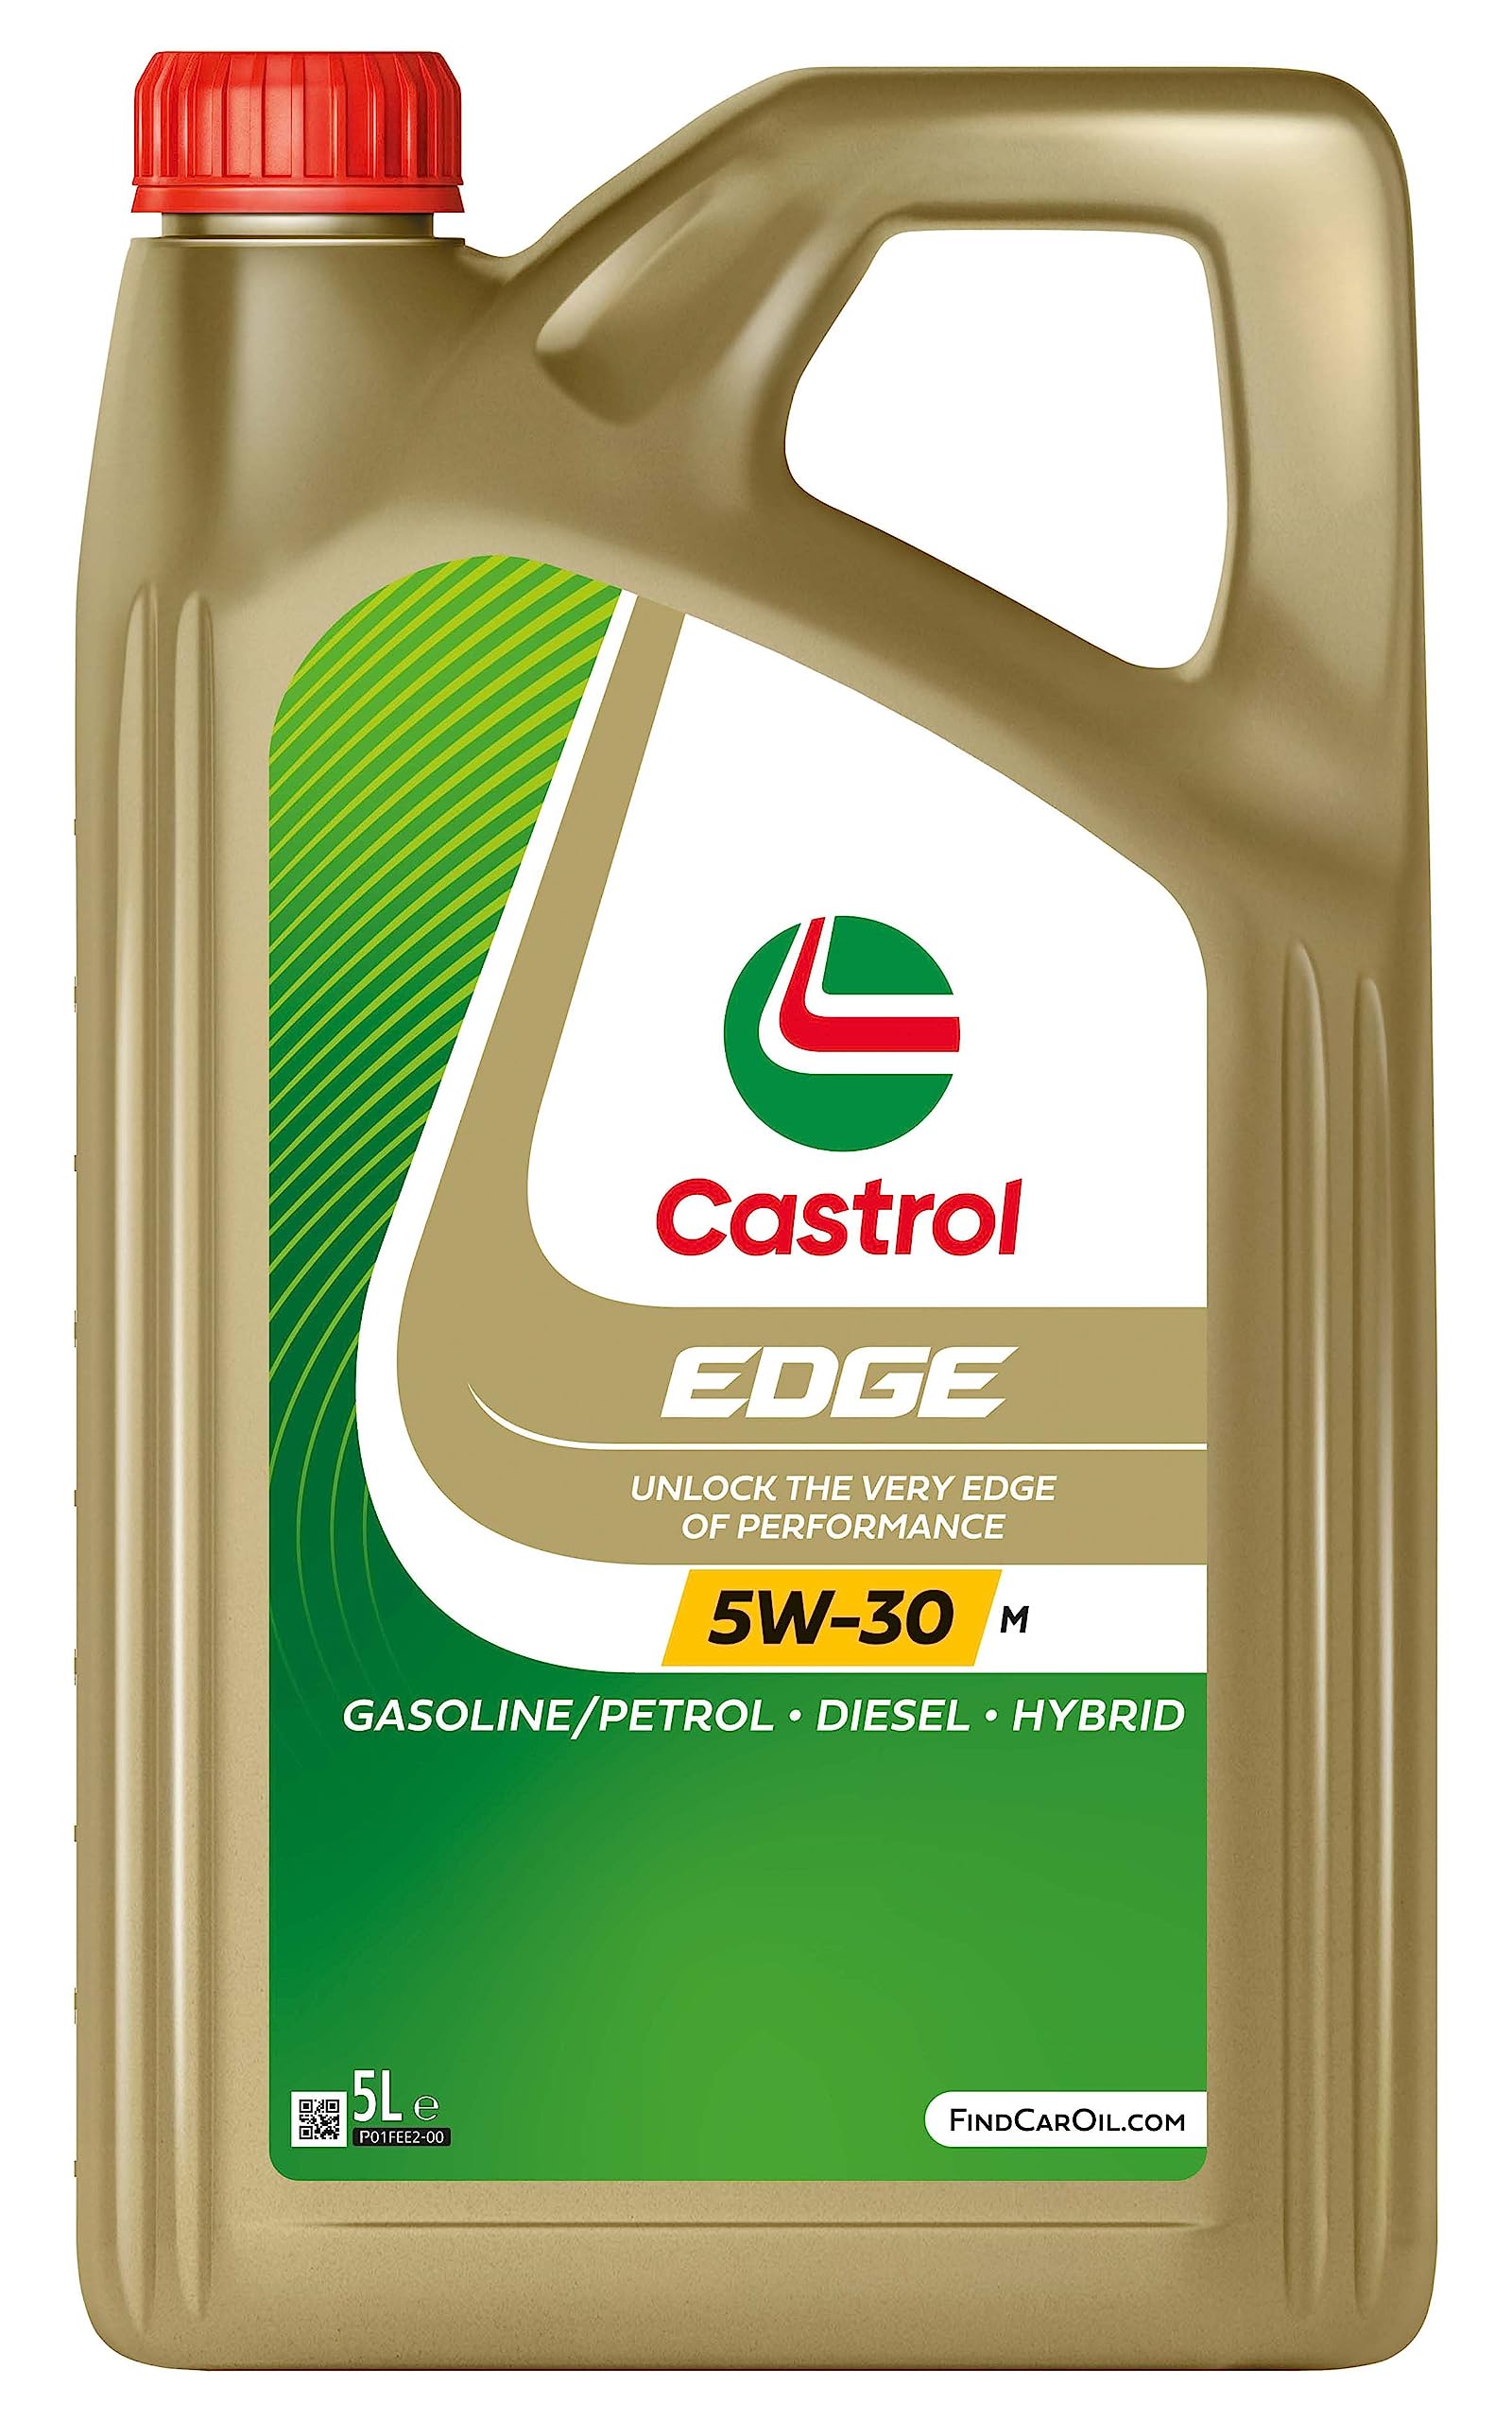 Castrol EDGE 5W-30 M Motoröl, 5L von Castrol